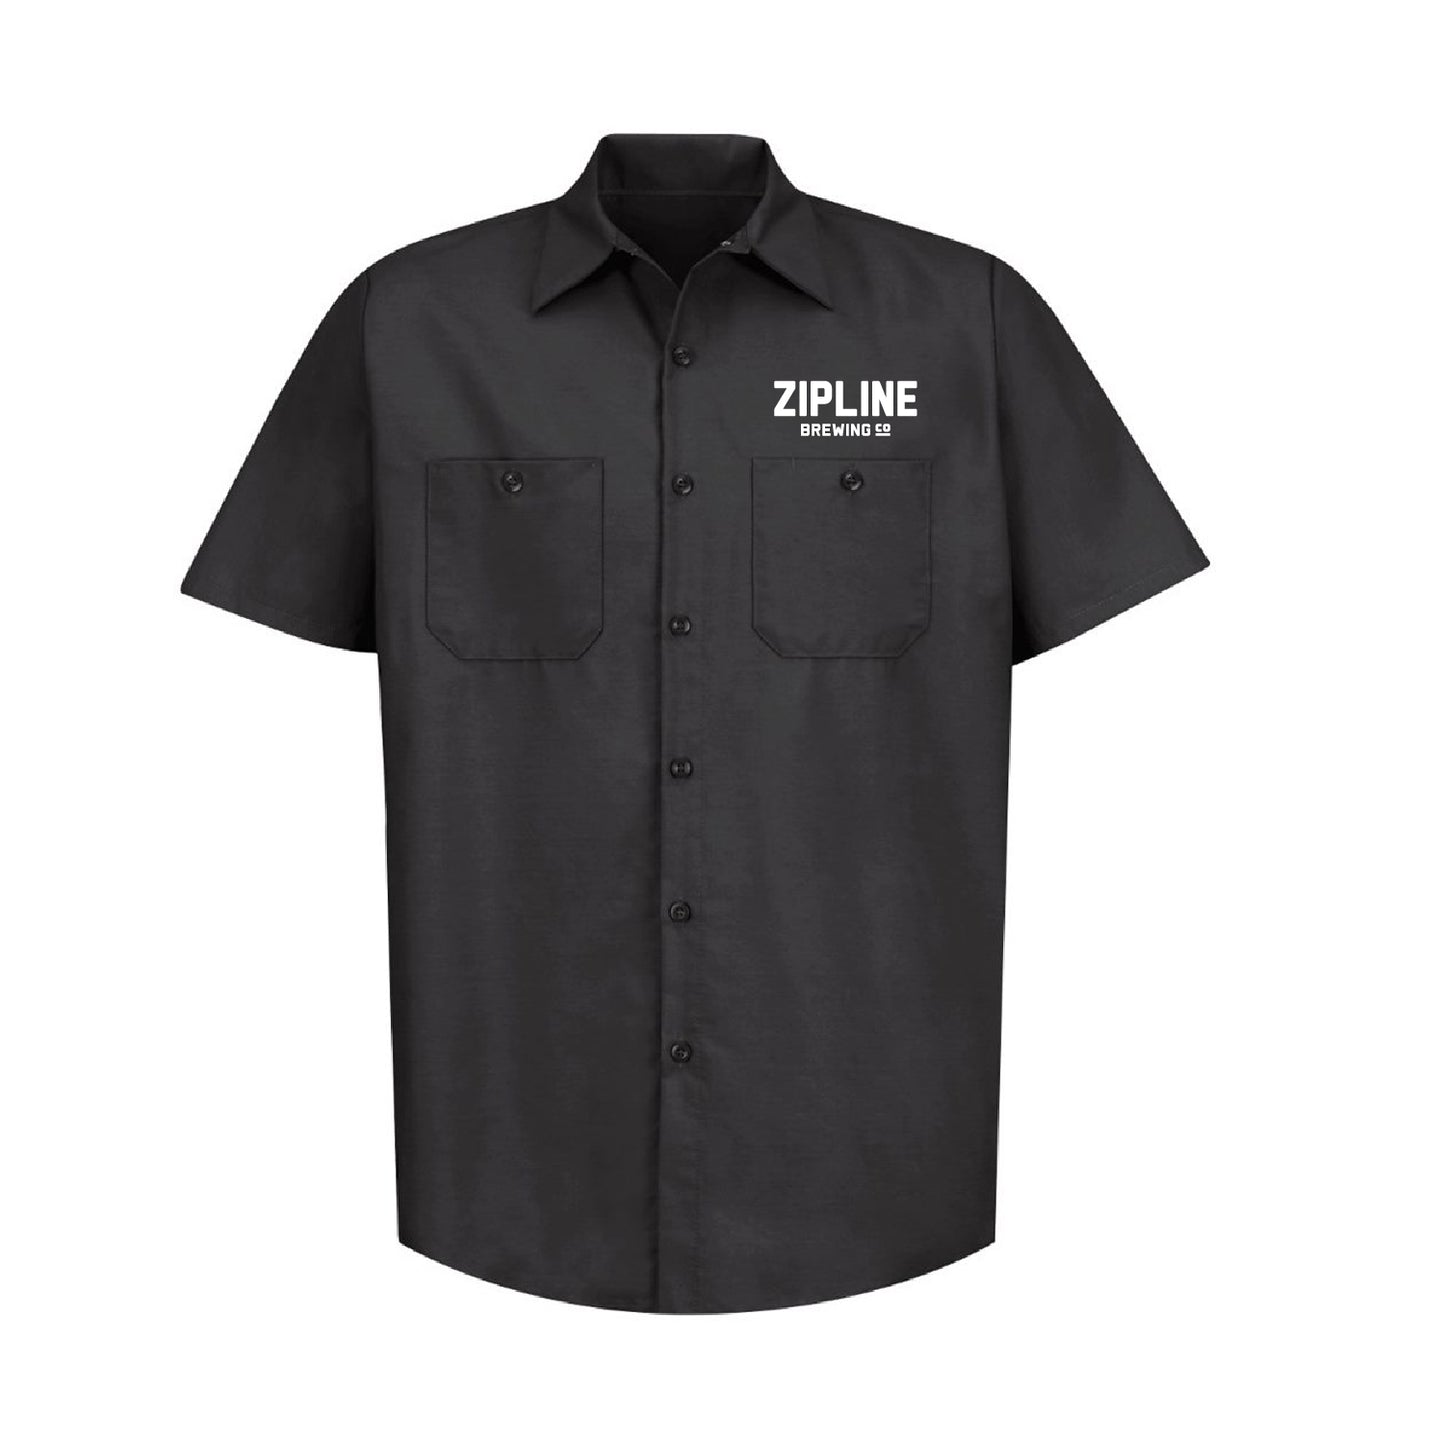 Zipline Brewing Co. Industrial Short Sleeve Work Shirt